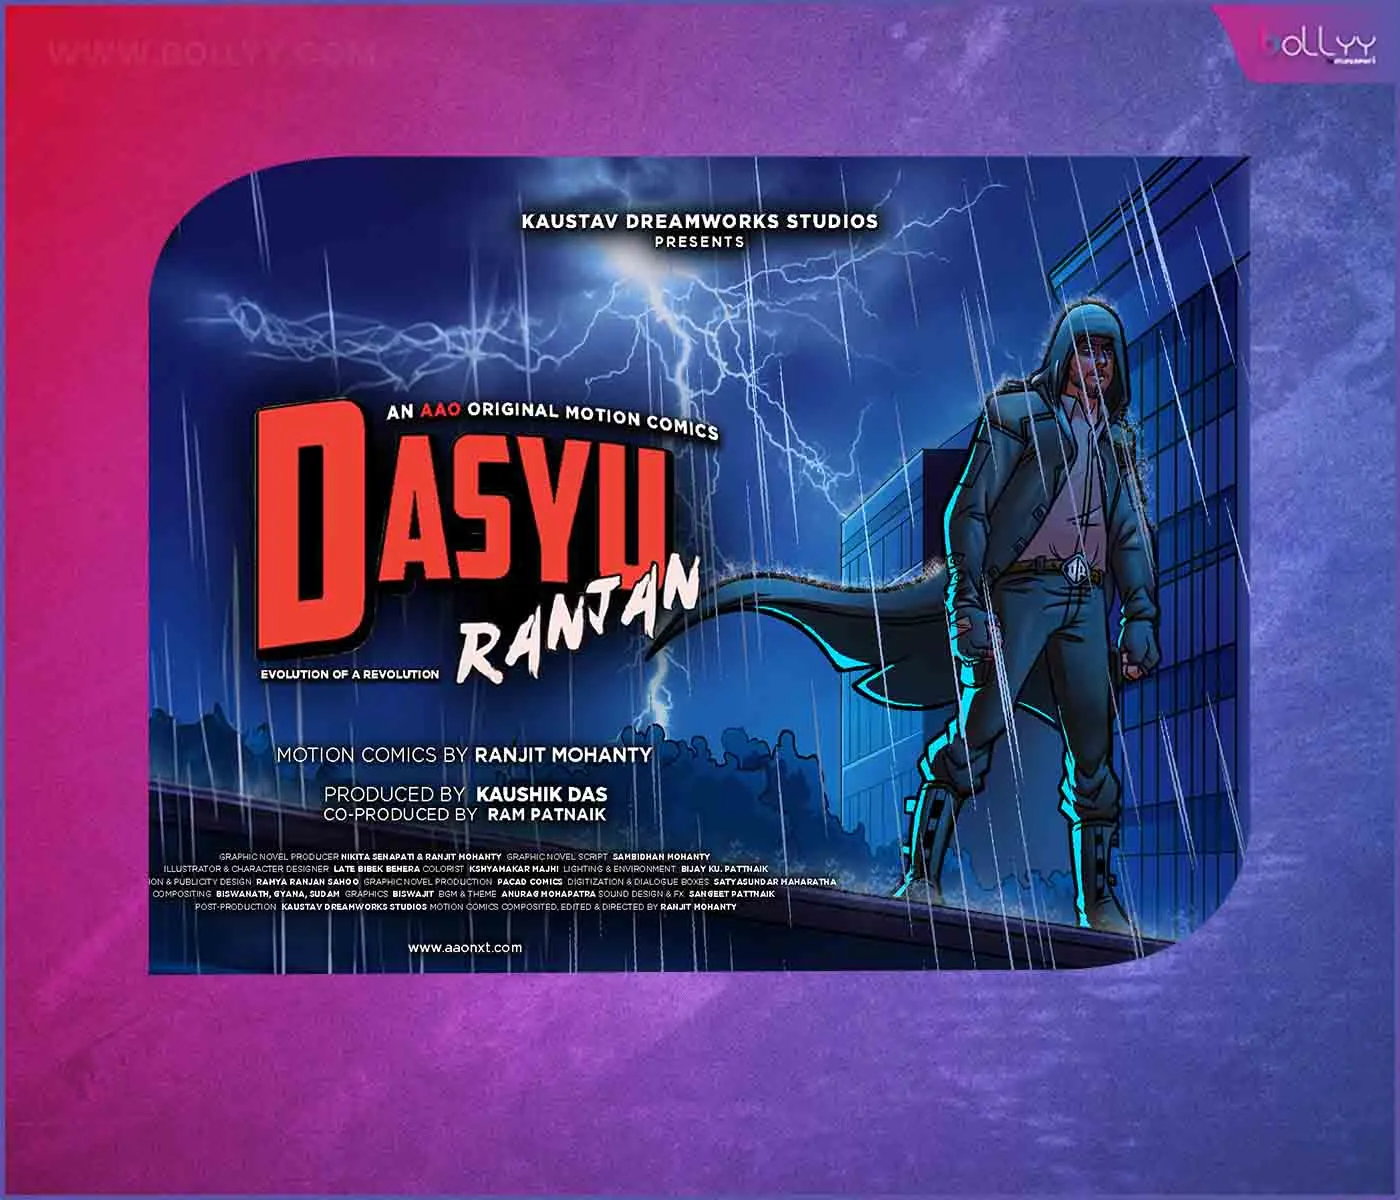 Exciting Launch of Dasyu Ranjan